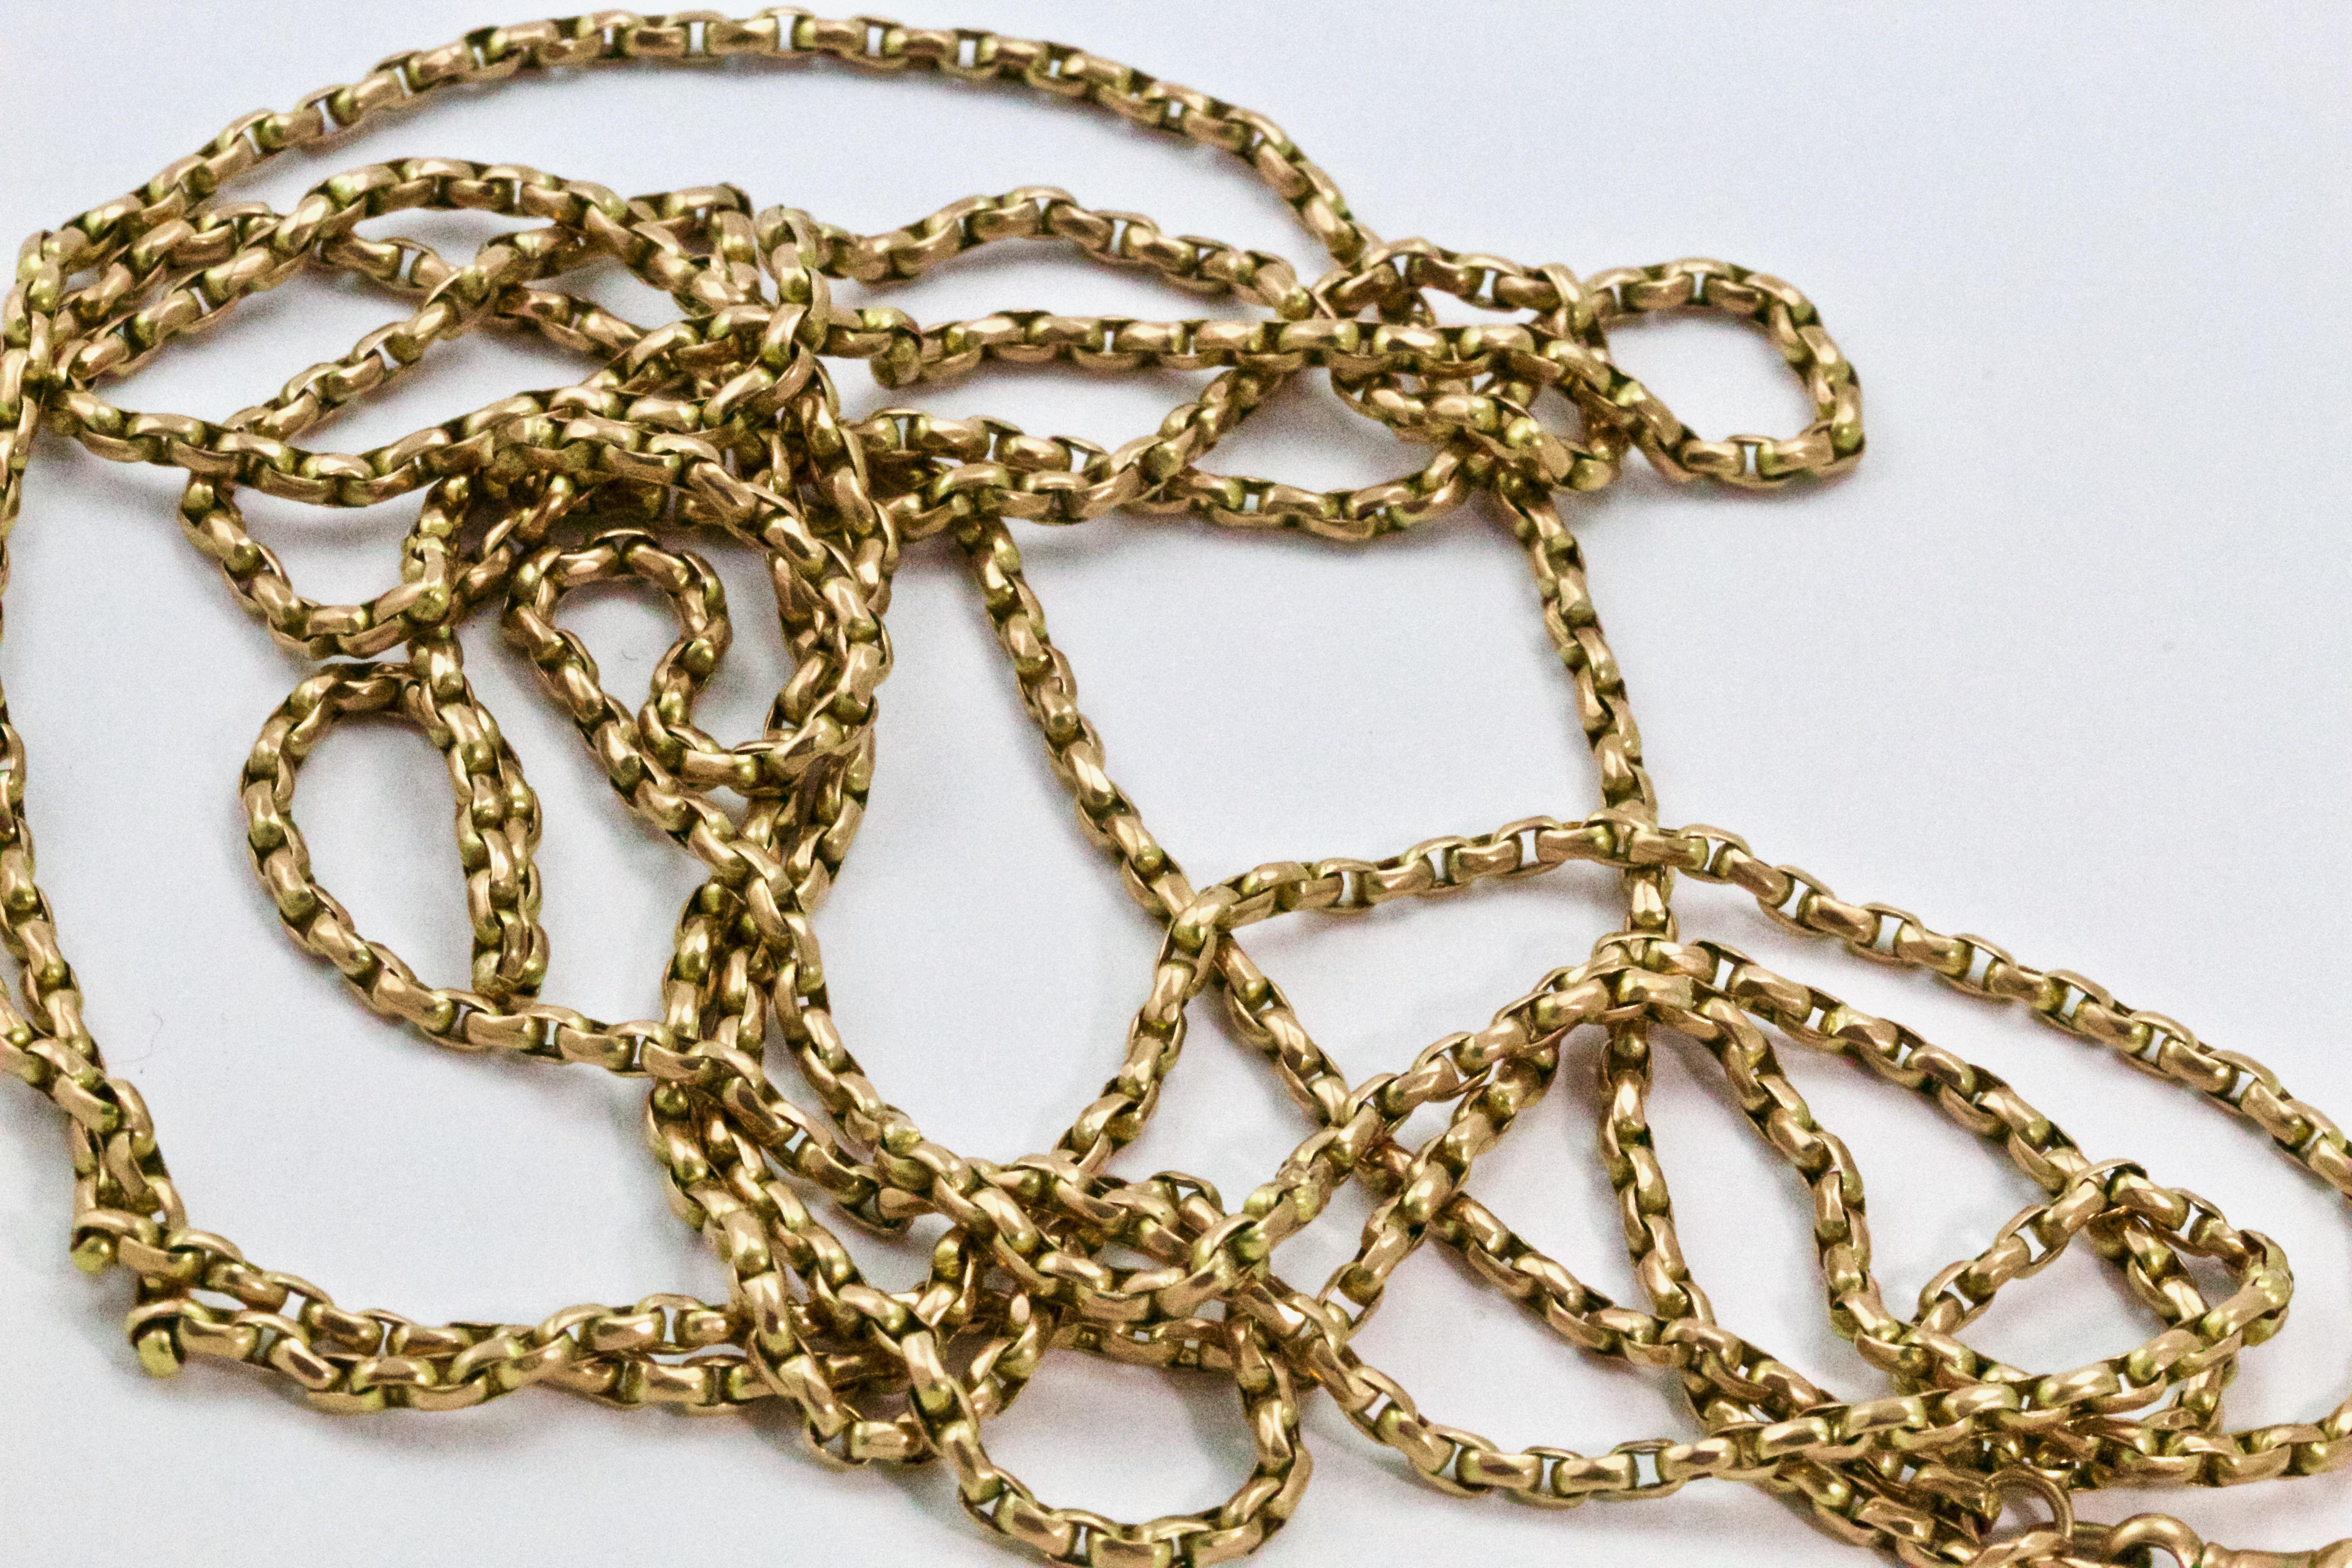 Antique Victorian 9 Carat Gold Long Guard Chain, circa 1880s 1